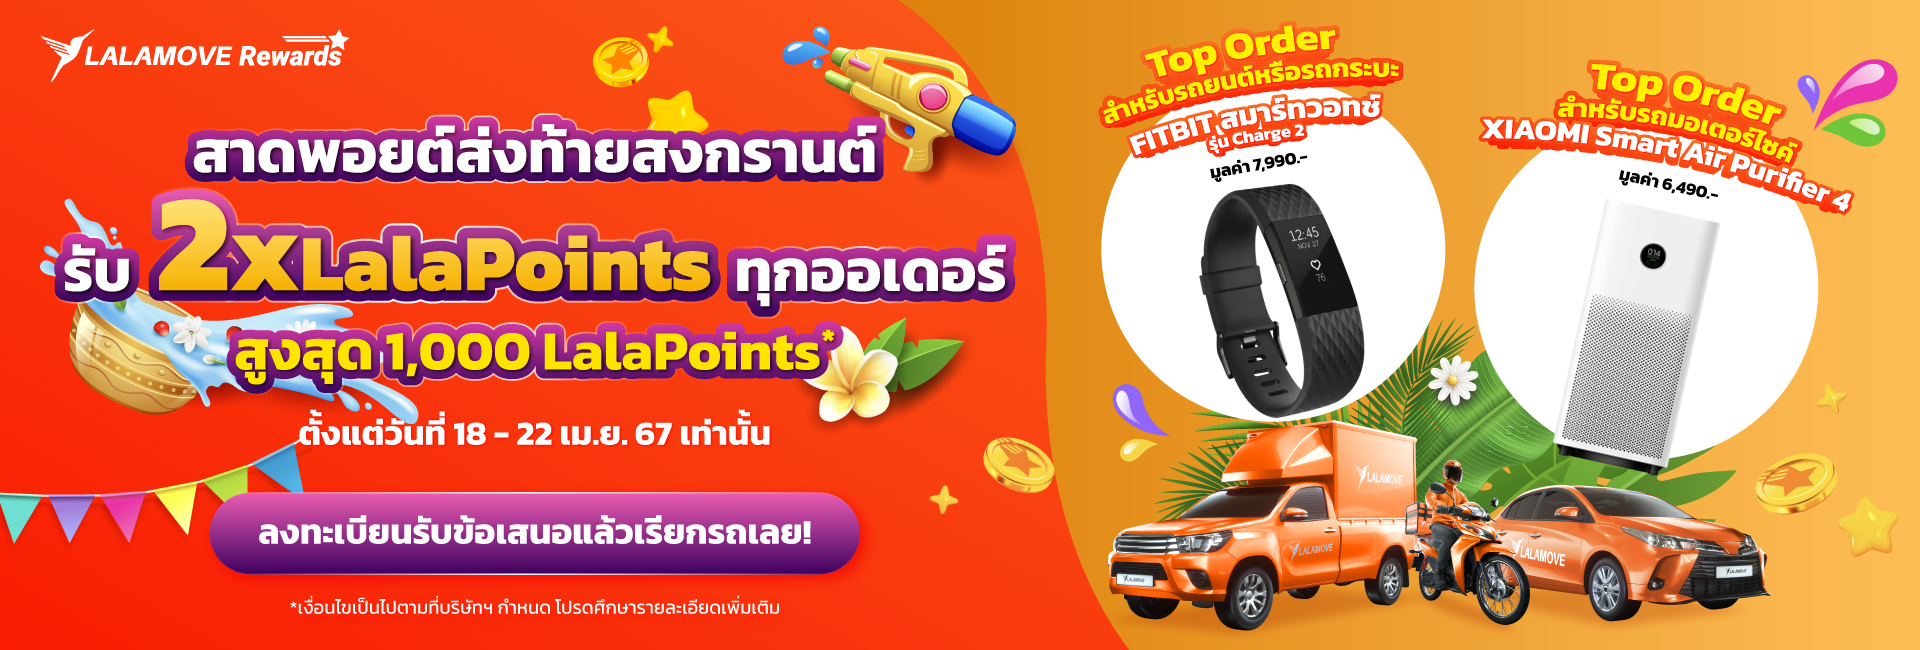 LYT_Post Songkran (2xLalaPoints Max.1,000) x Physical Reward_Web